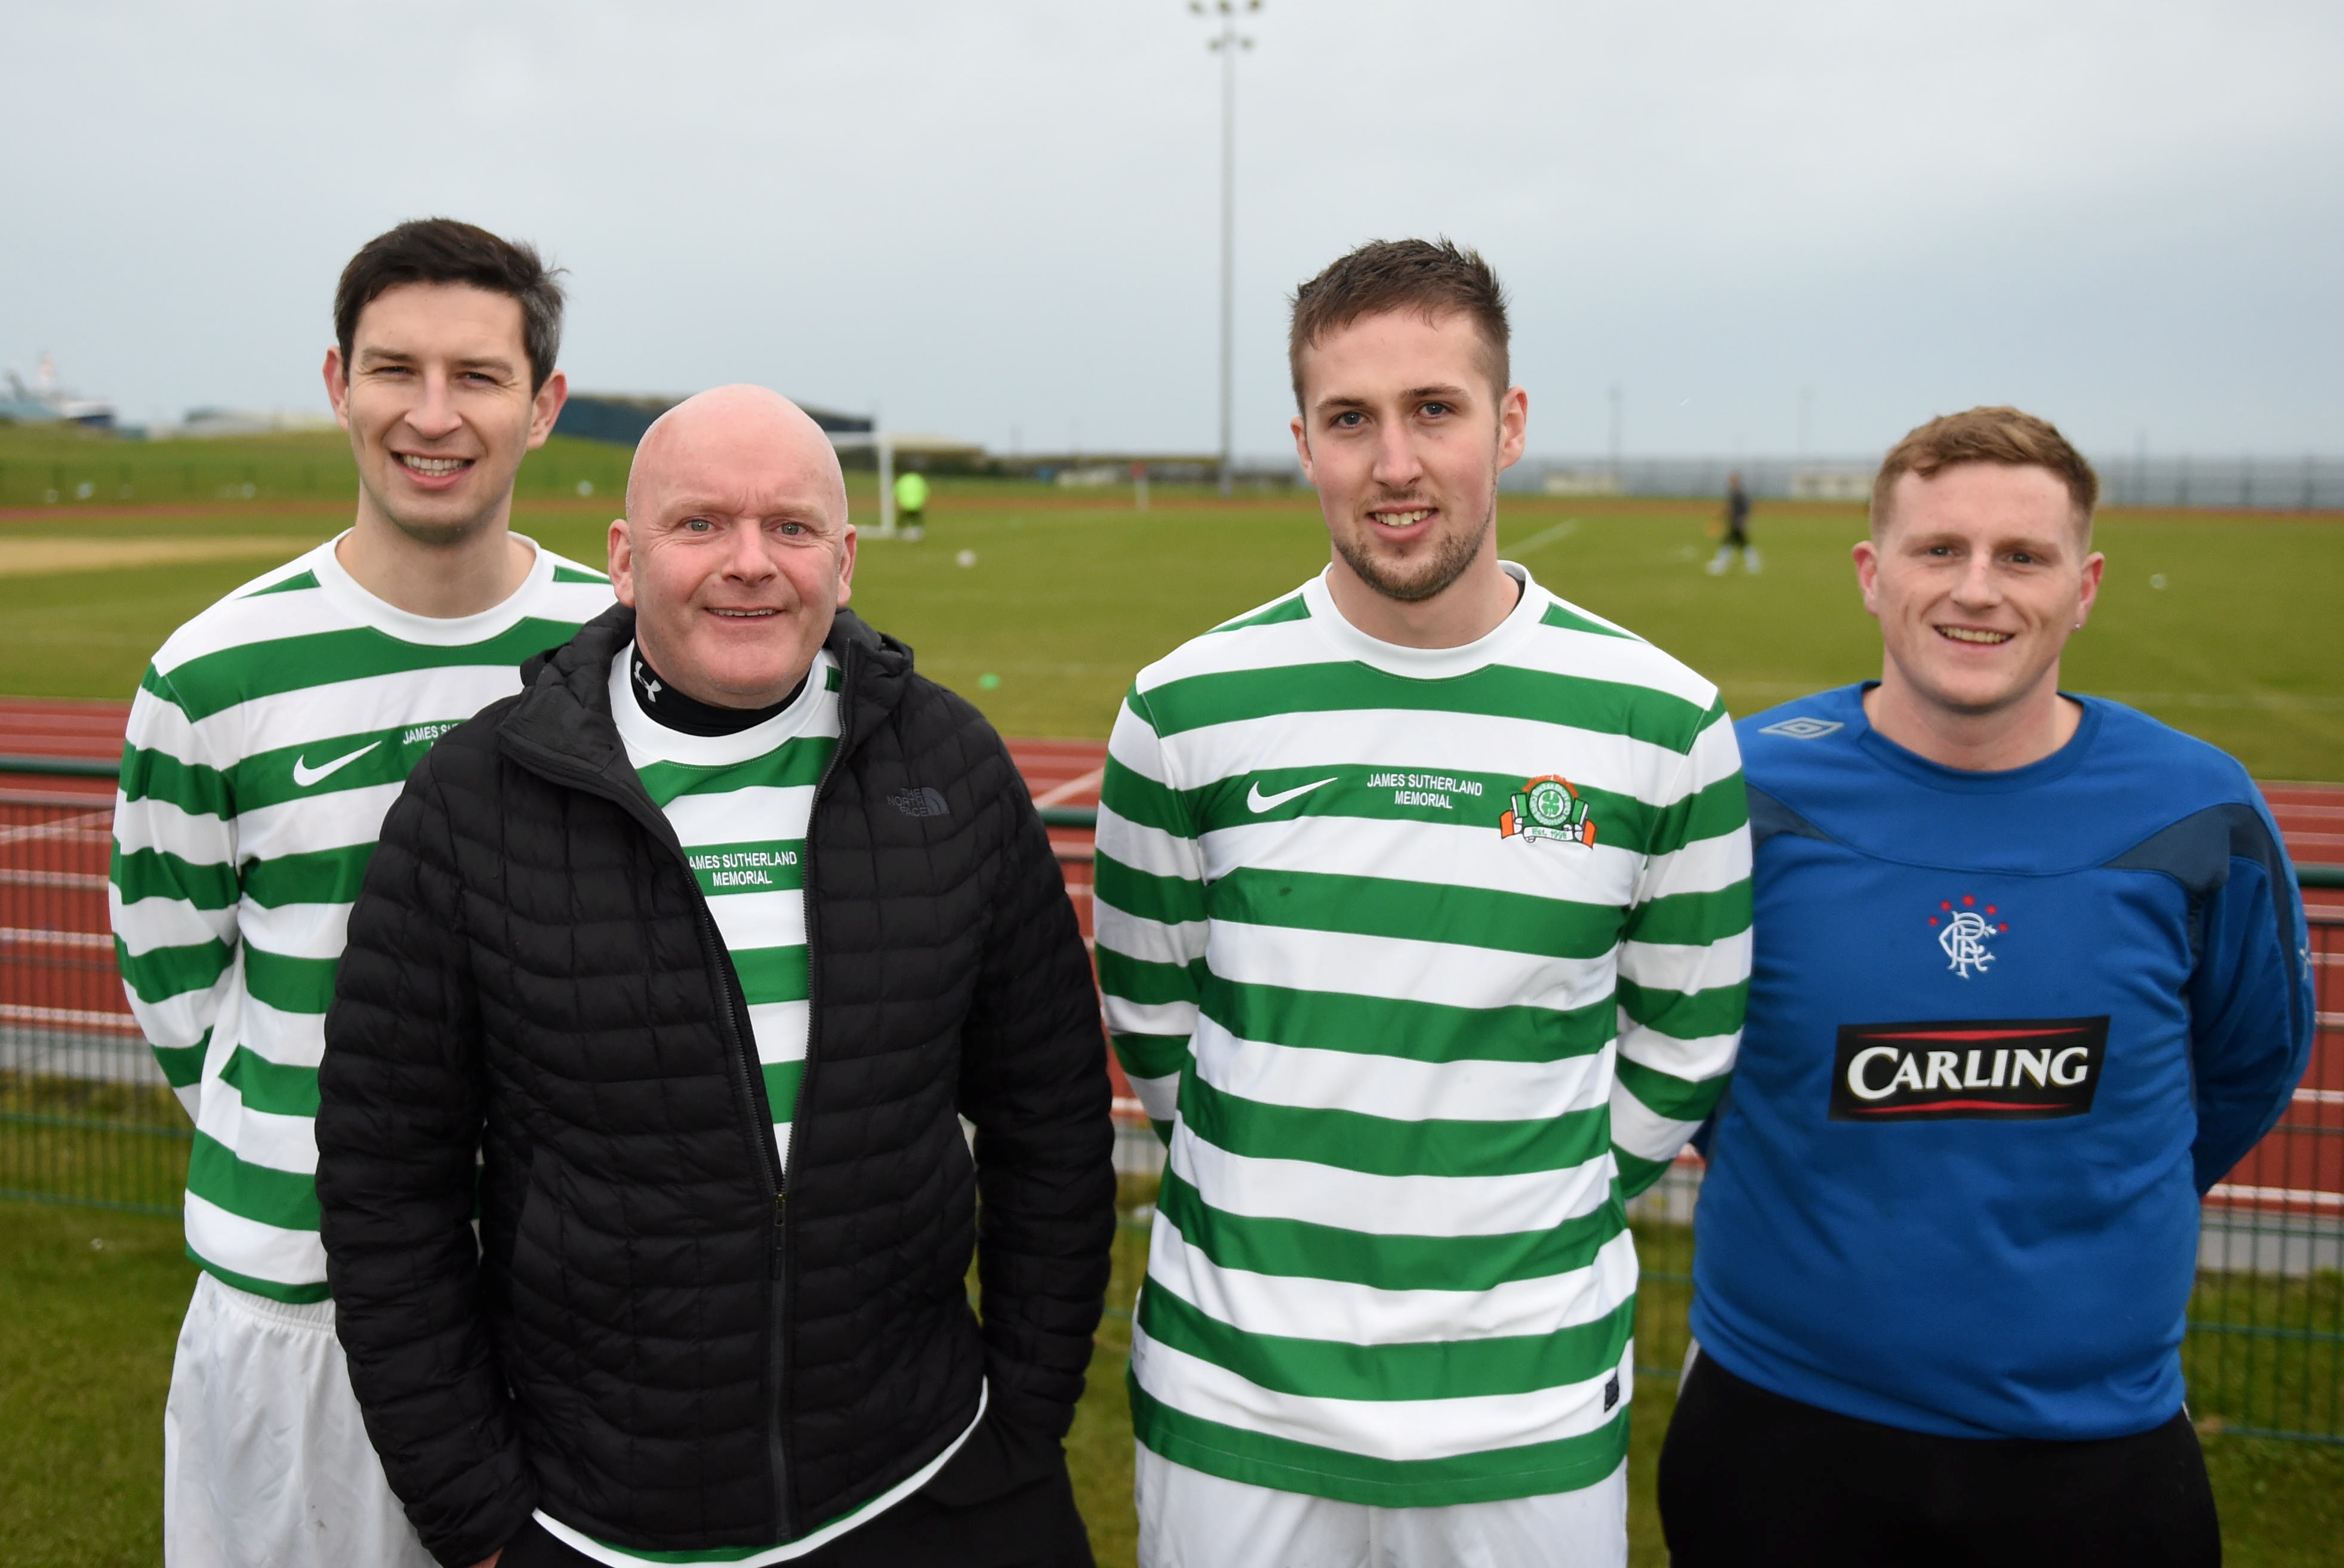 From left: Michael Clark captain of 'Celtic', Organiser Norman Reid, Ryan Greig and Eddie Thomson, captain of the 'Rangers' team



Picture by Paul Glendell